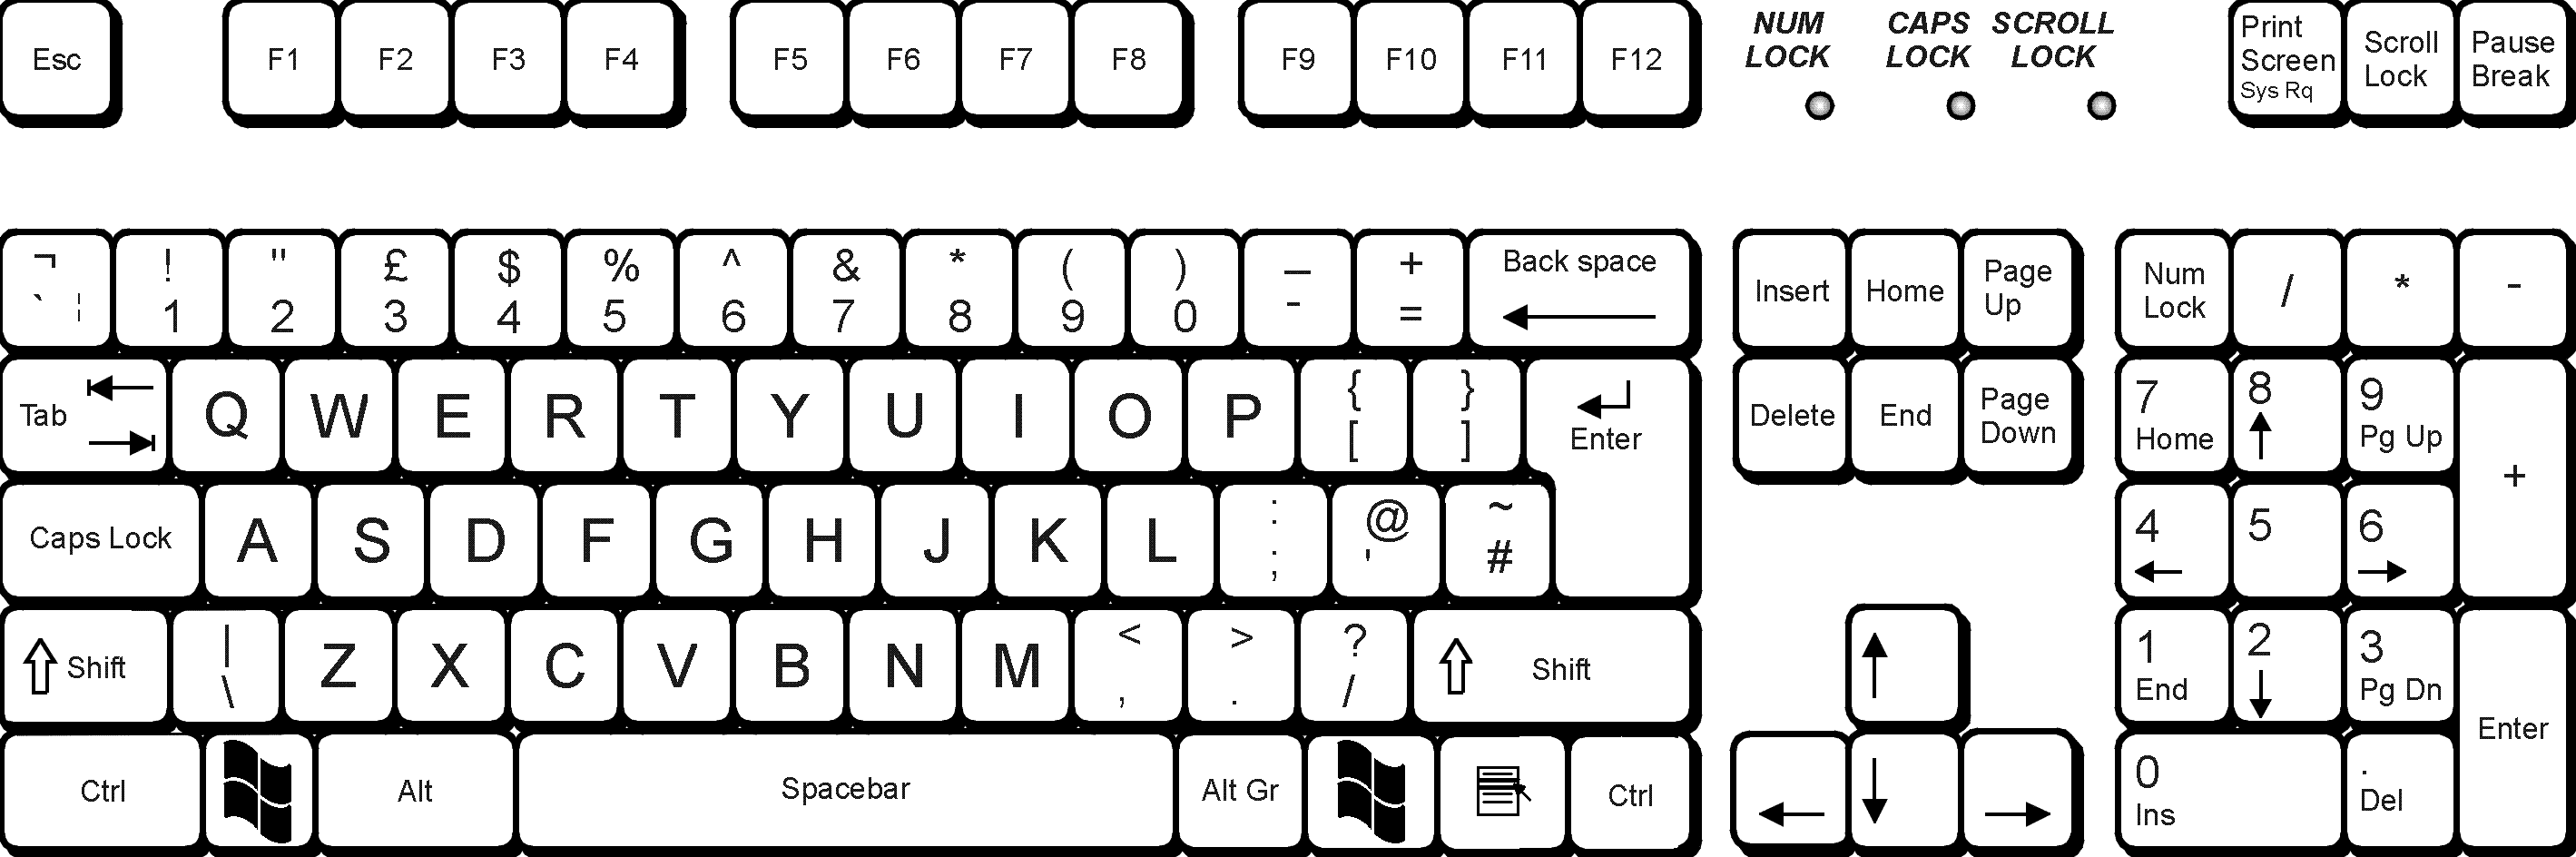 shift multiple keys keyboard layout editor